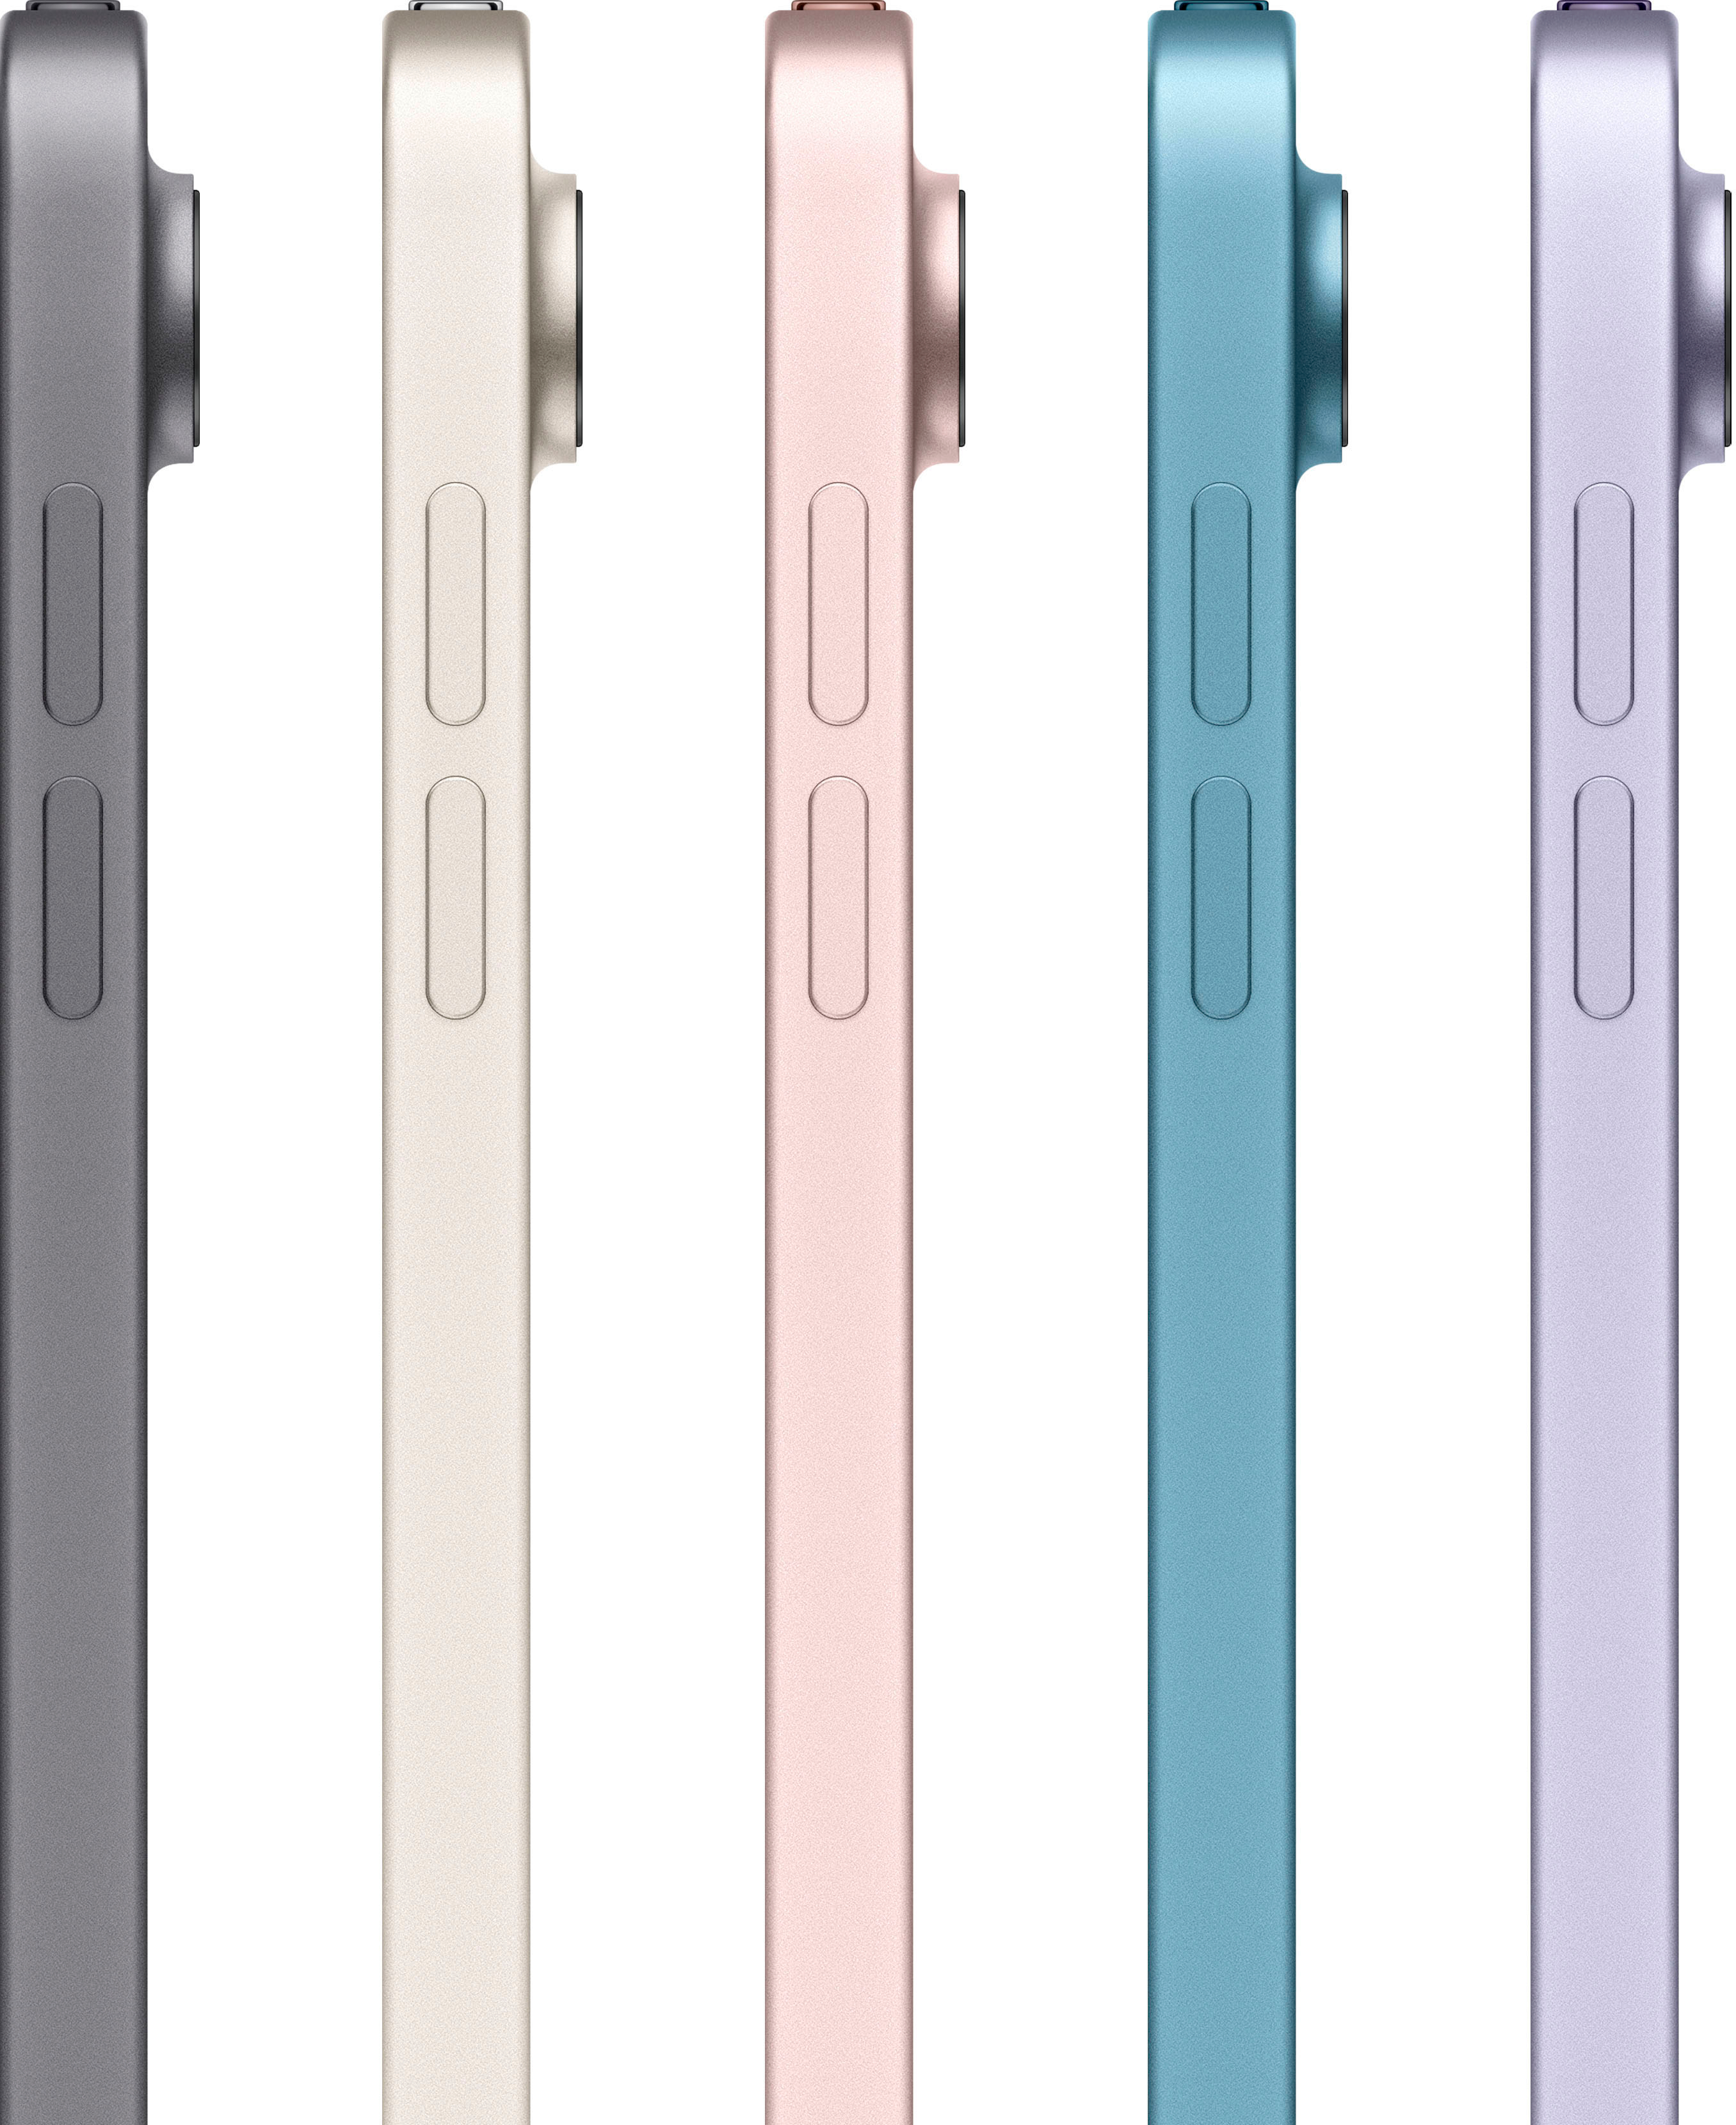 Restored Apple iPad Air (10.9inch, WiFi, 64GB) Sky Blue (4th Generation)  (Refurbished) 